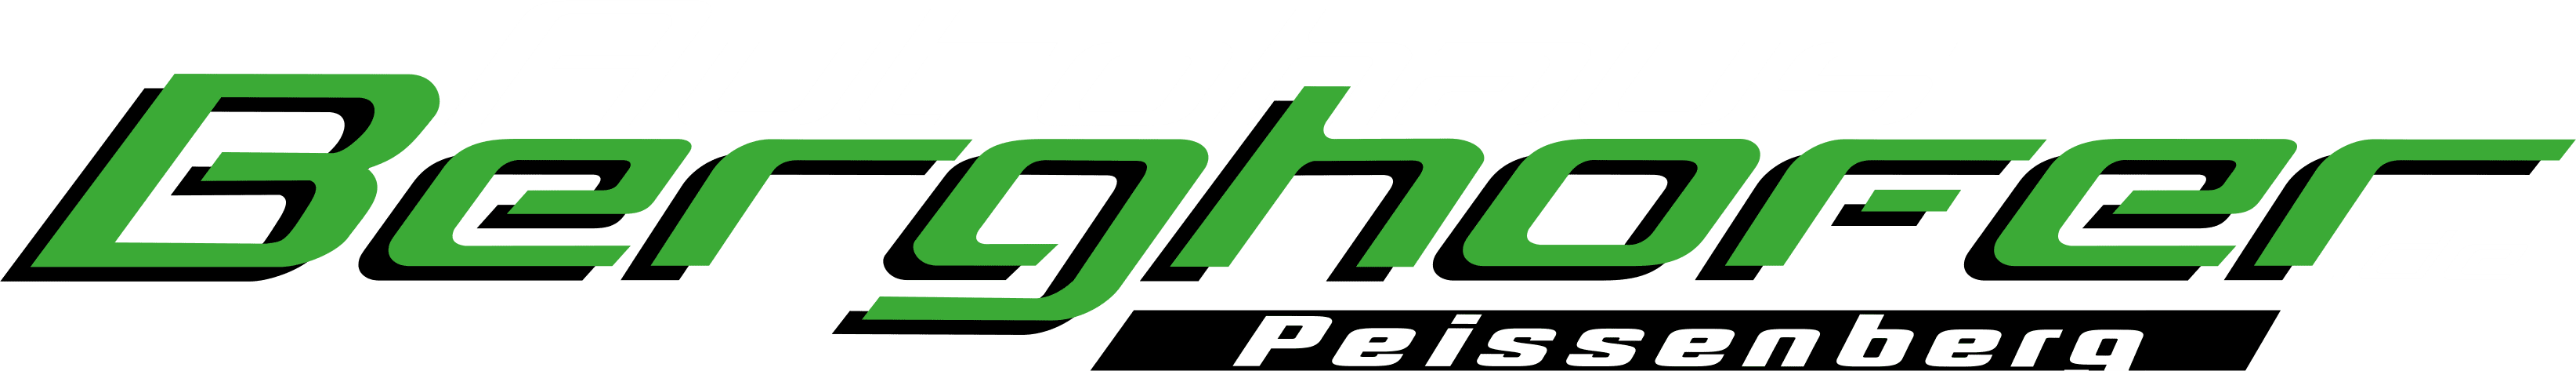 Berghofer Logo Footer